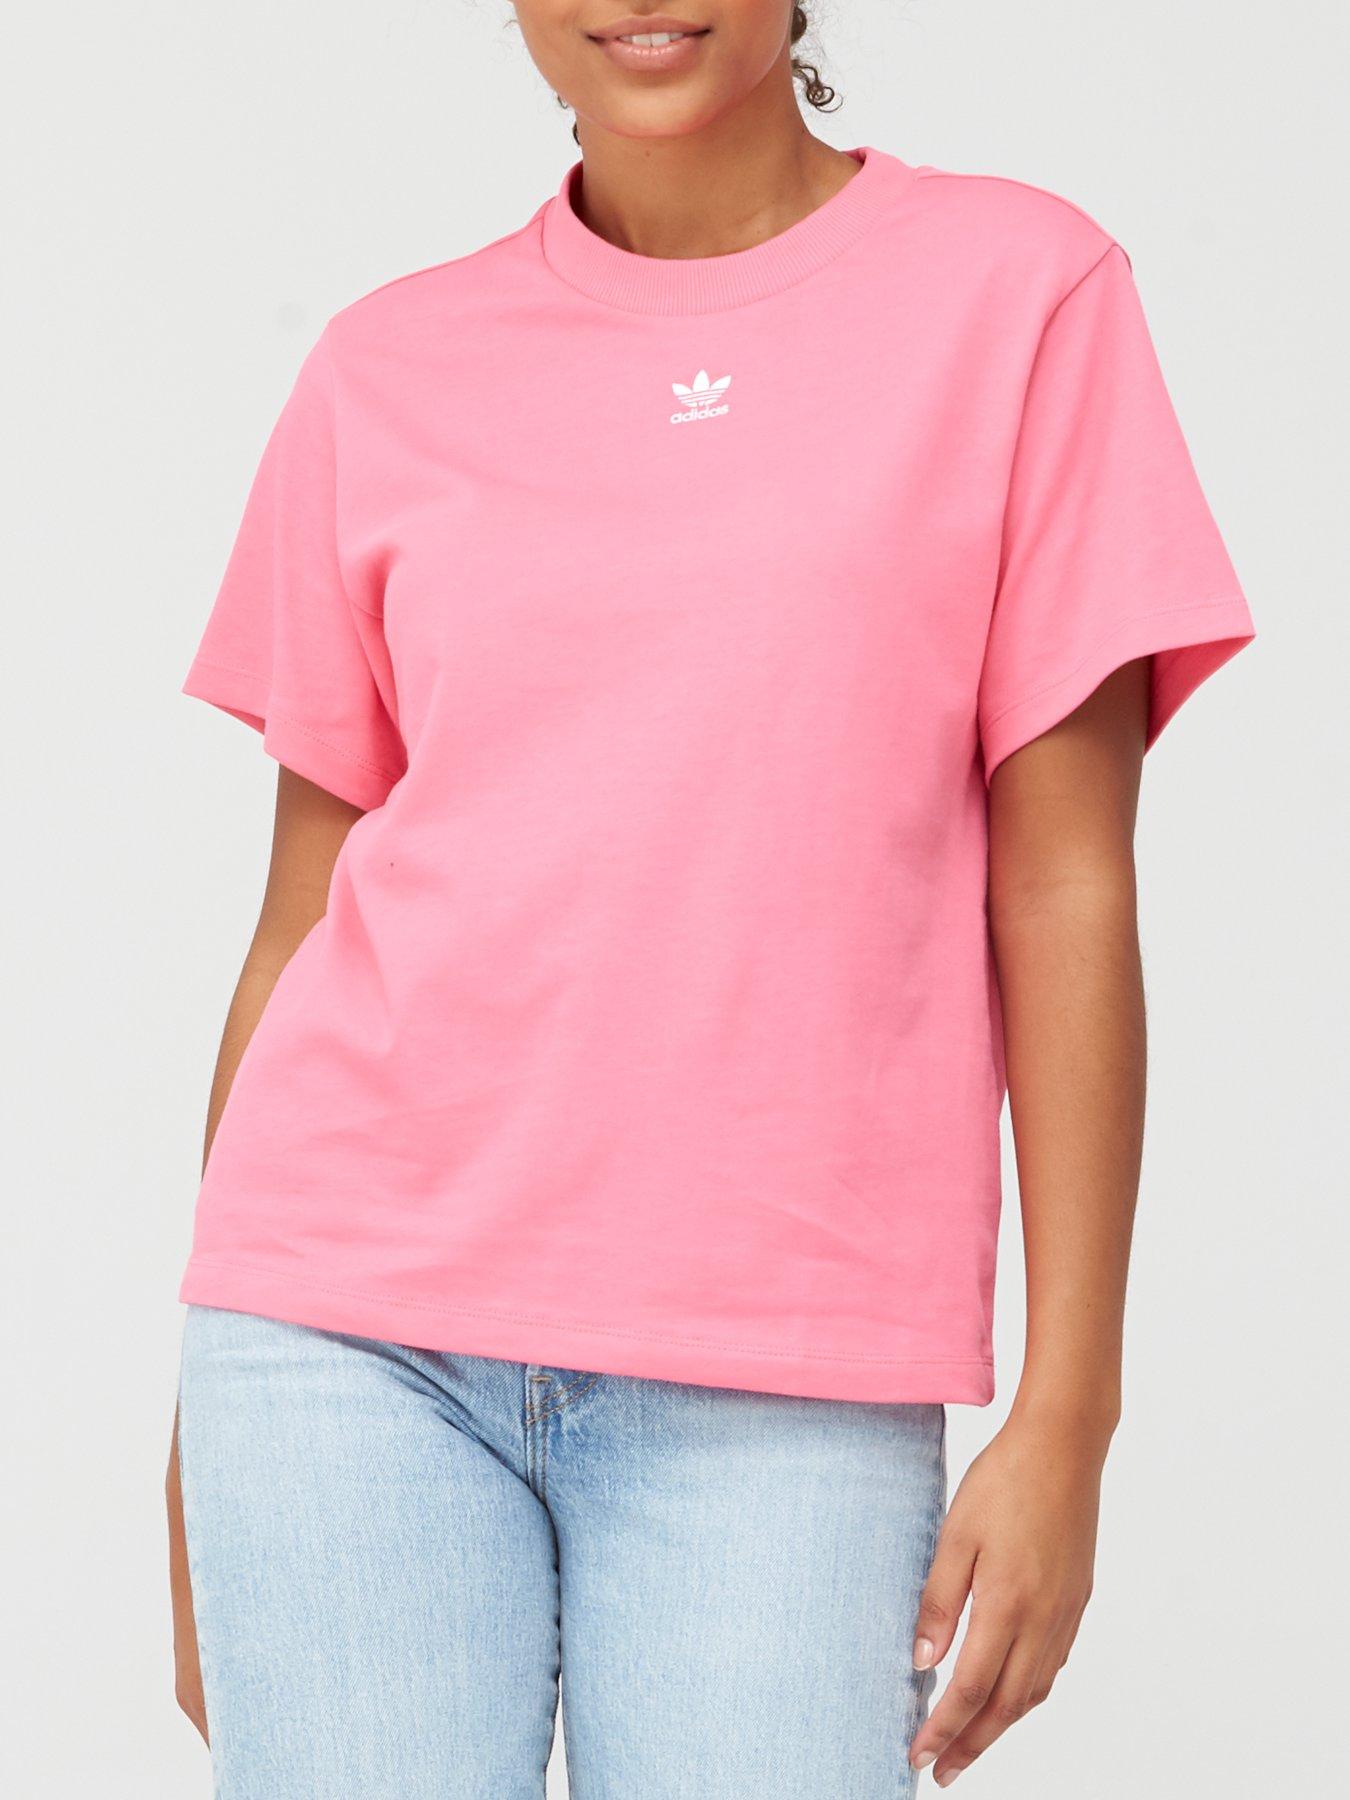 pink adidas shirts womens